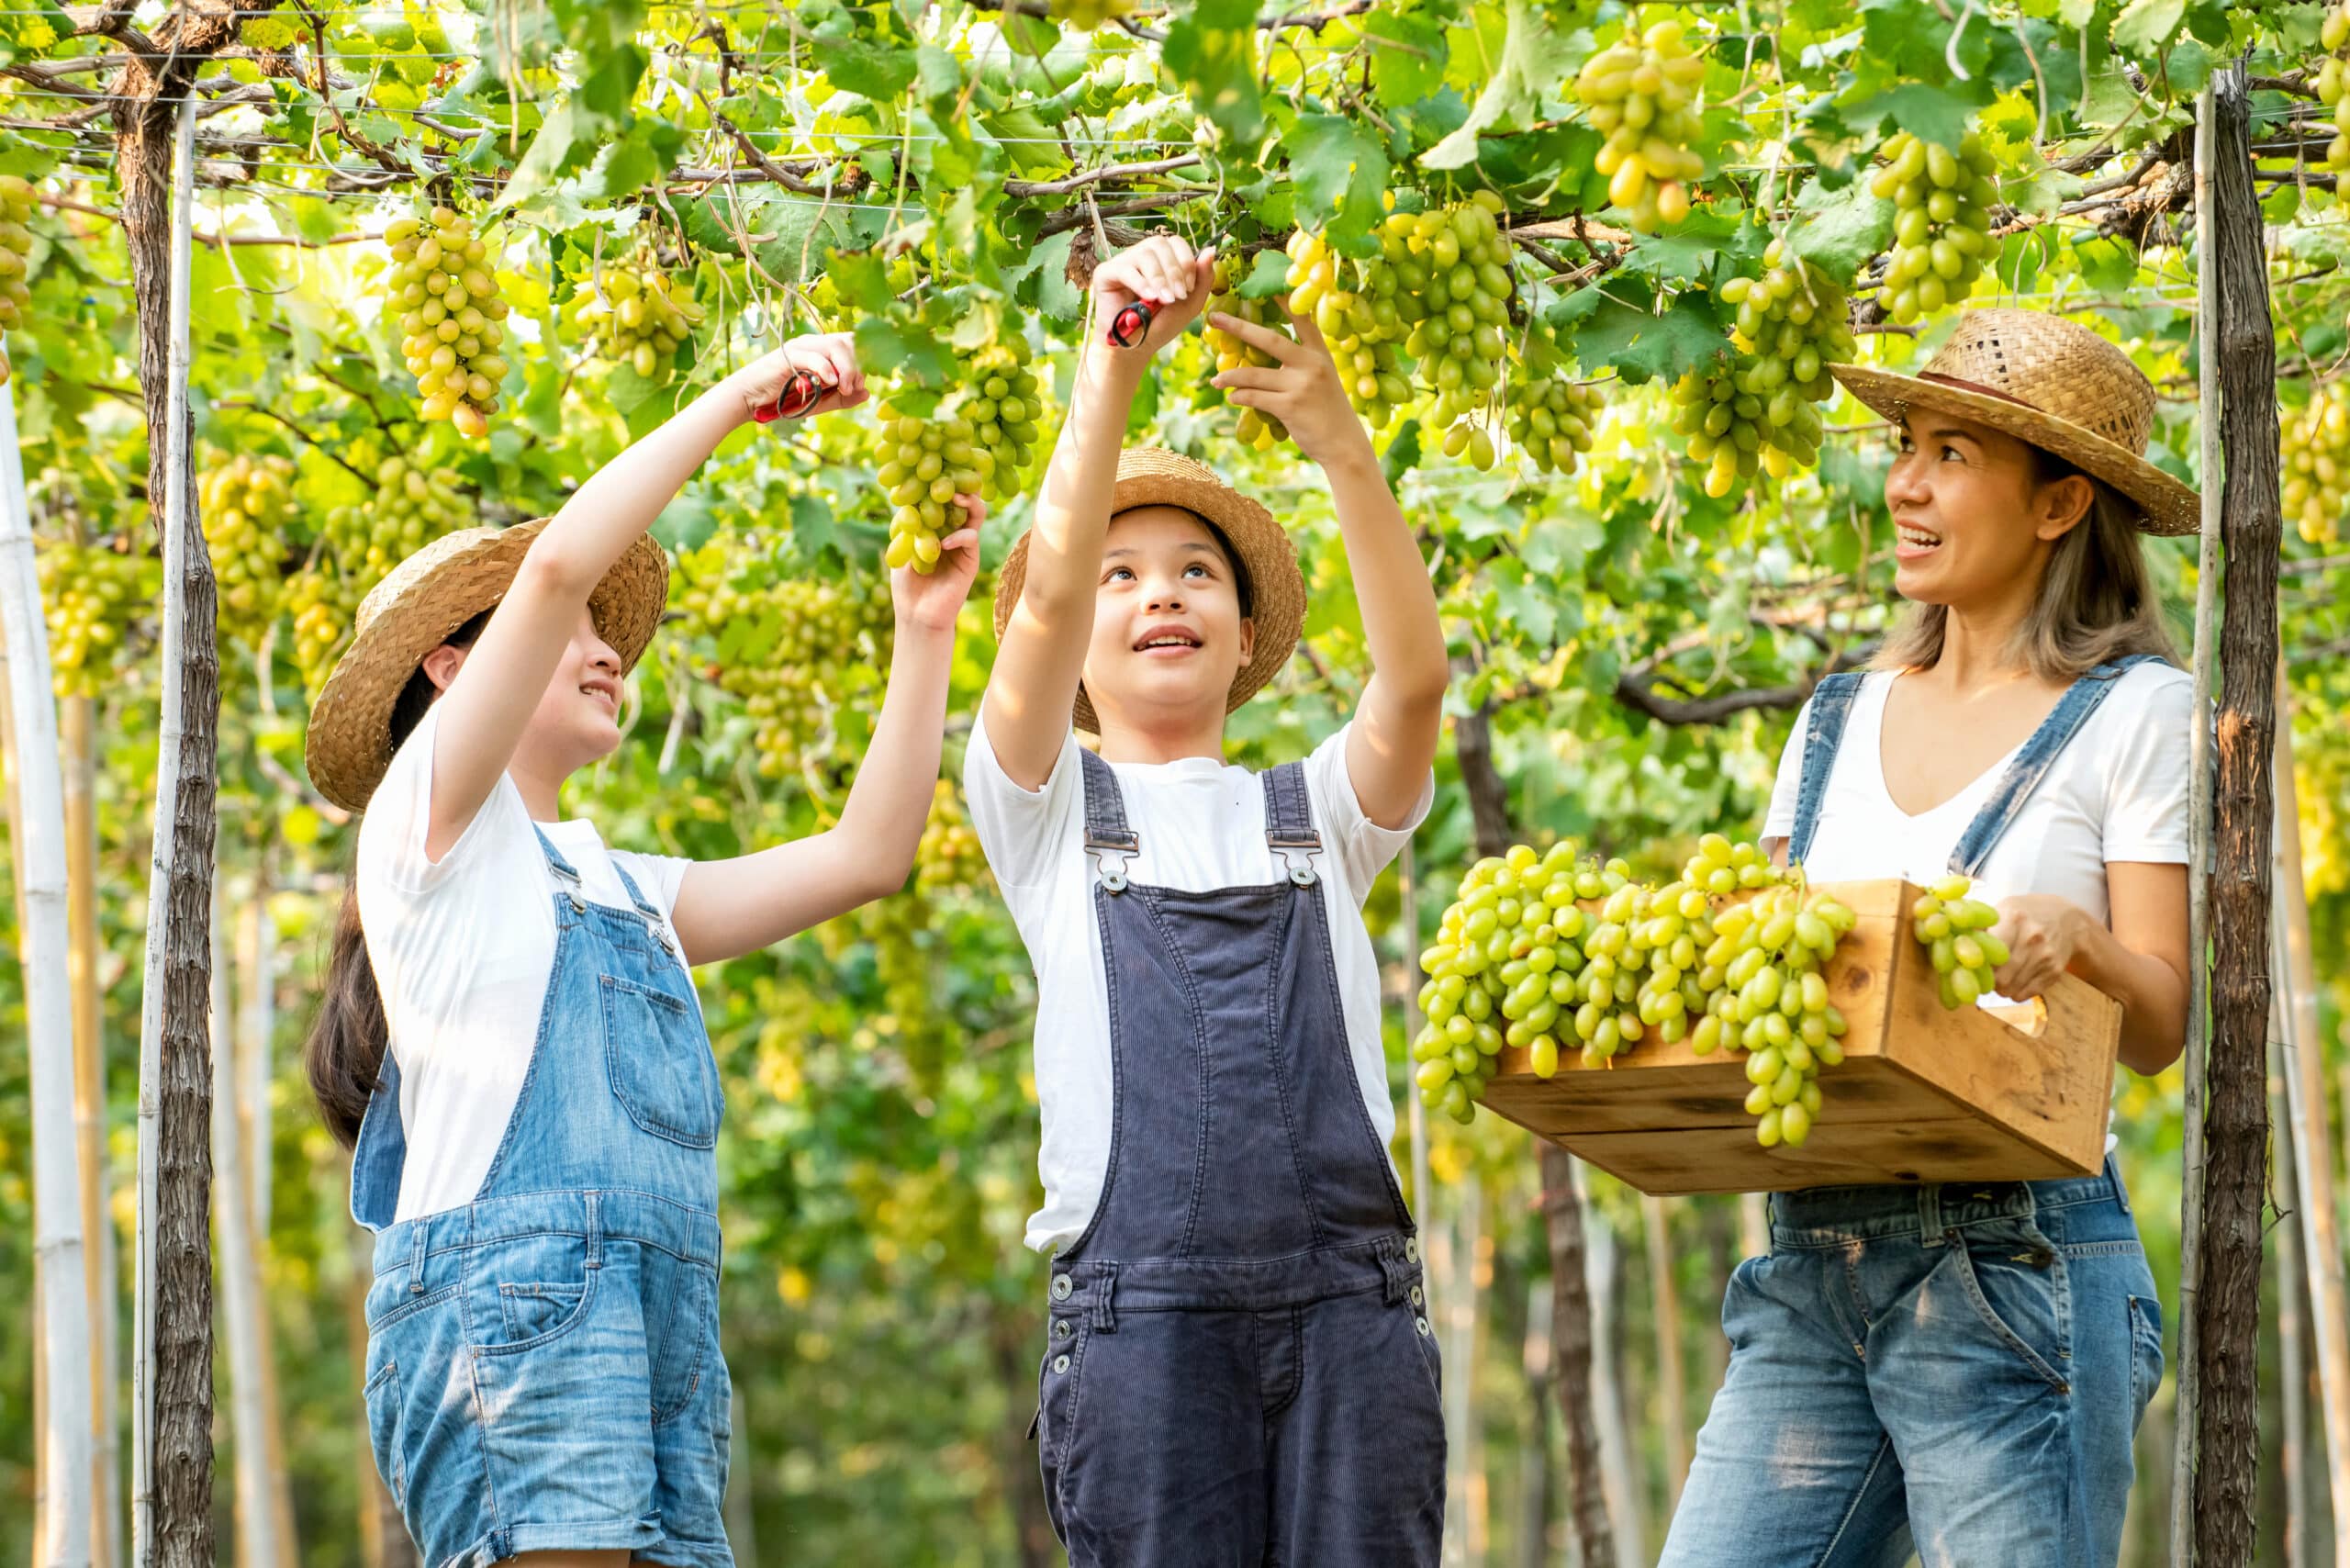 Kids picking grapes in a vineyard